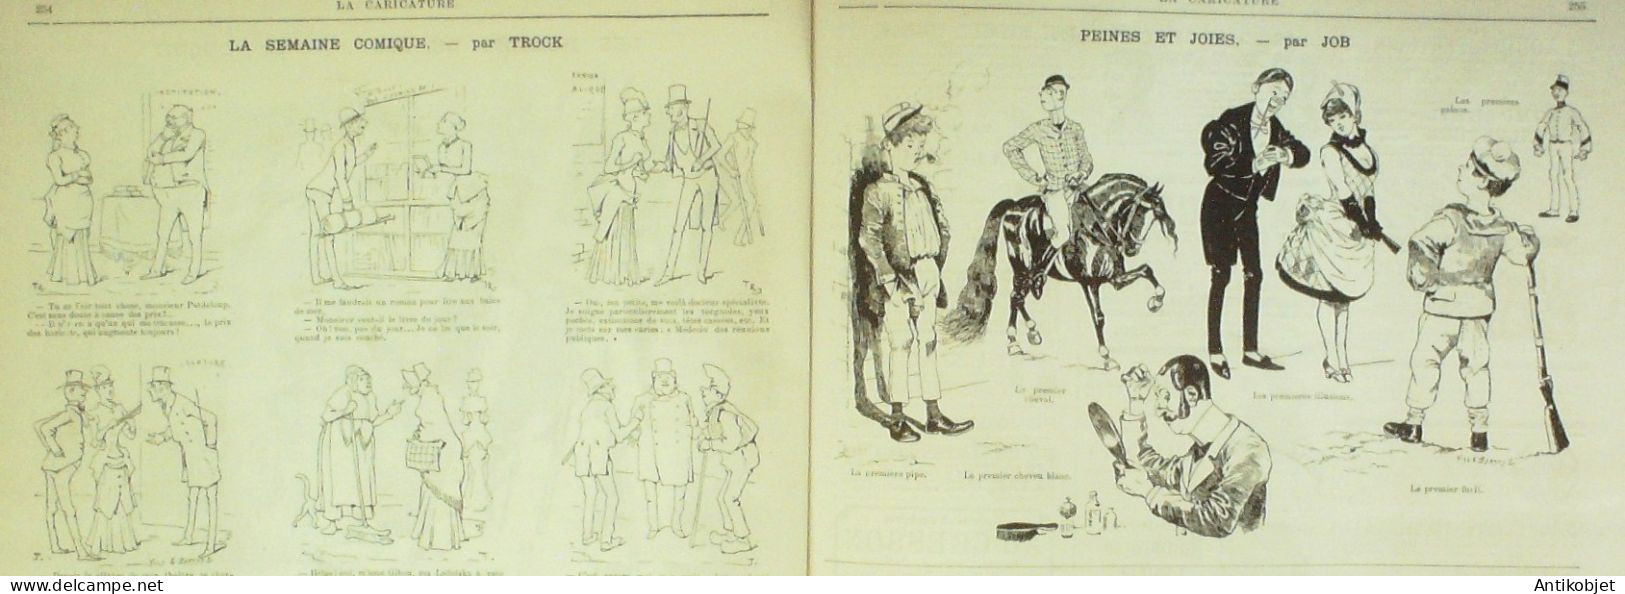 La Caricature 1884 N°240 Vie Joyeuse Job Loys Meissonier Par Luque Trock - Zeitschriften - Vor 1900